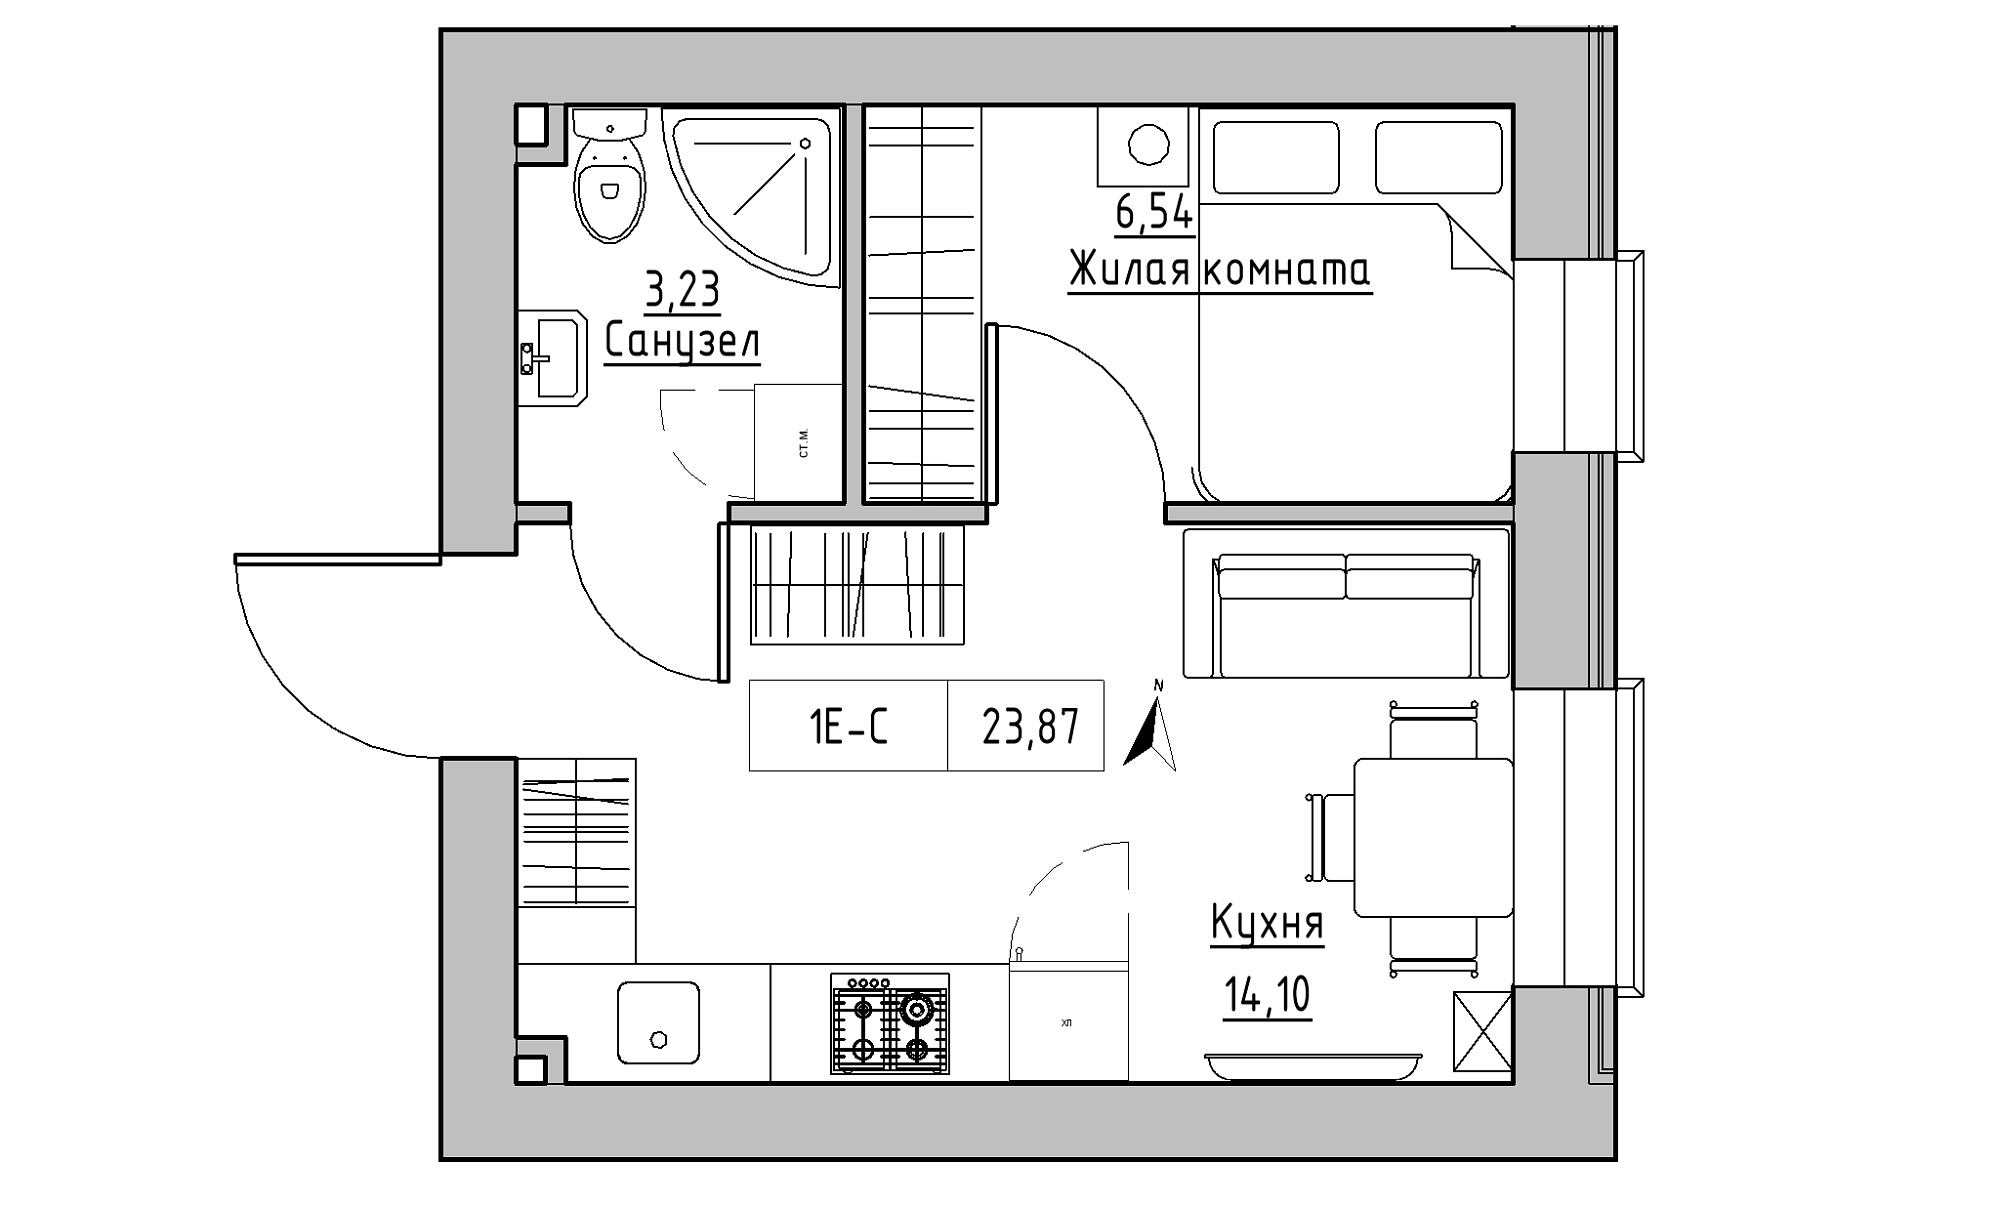 Planning 1-rm flats area 23.87m2, KS-023-02/0004.